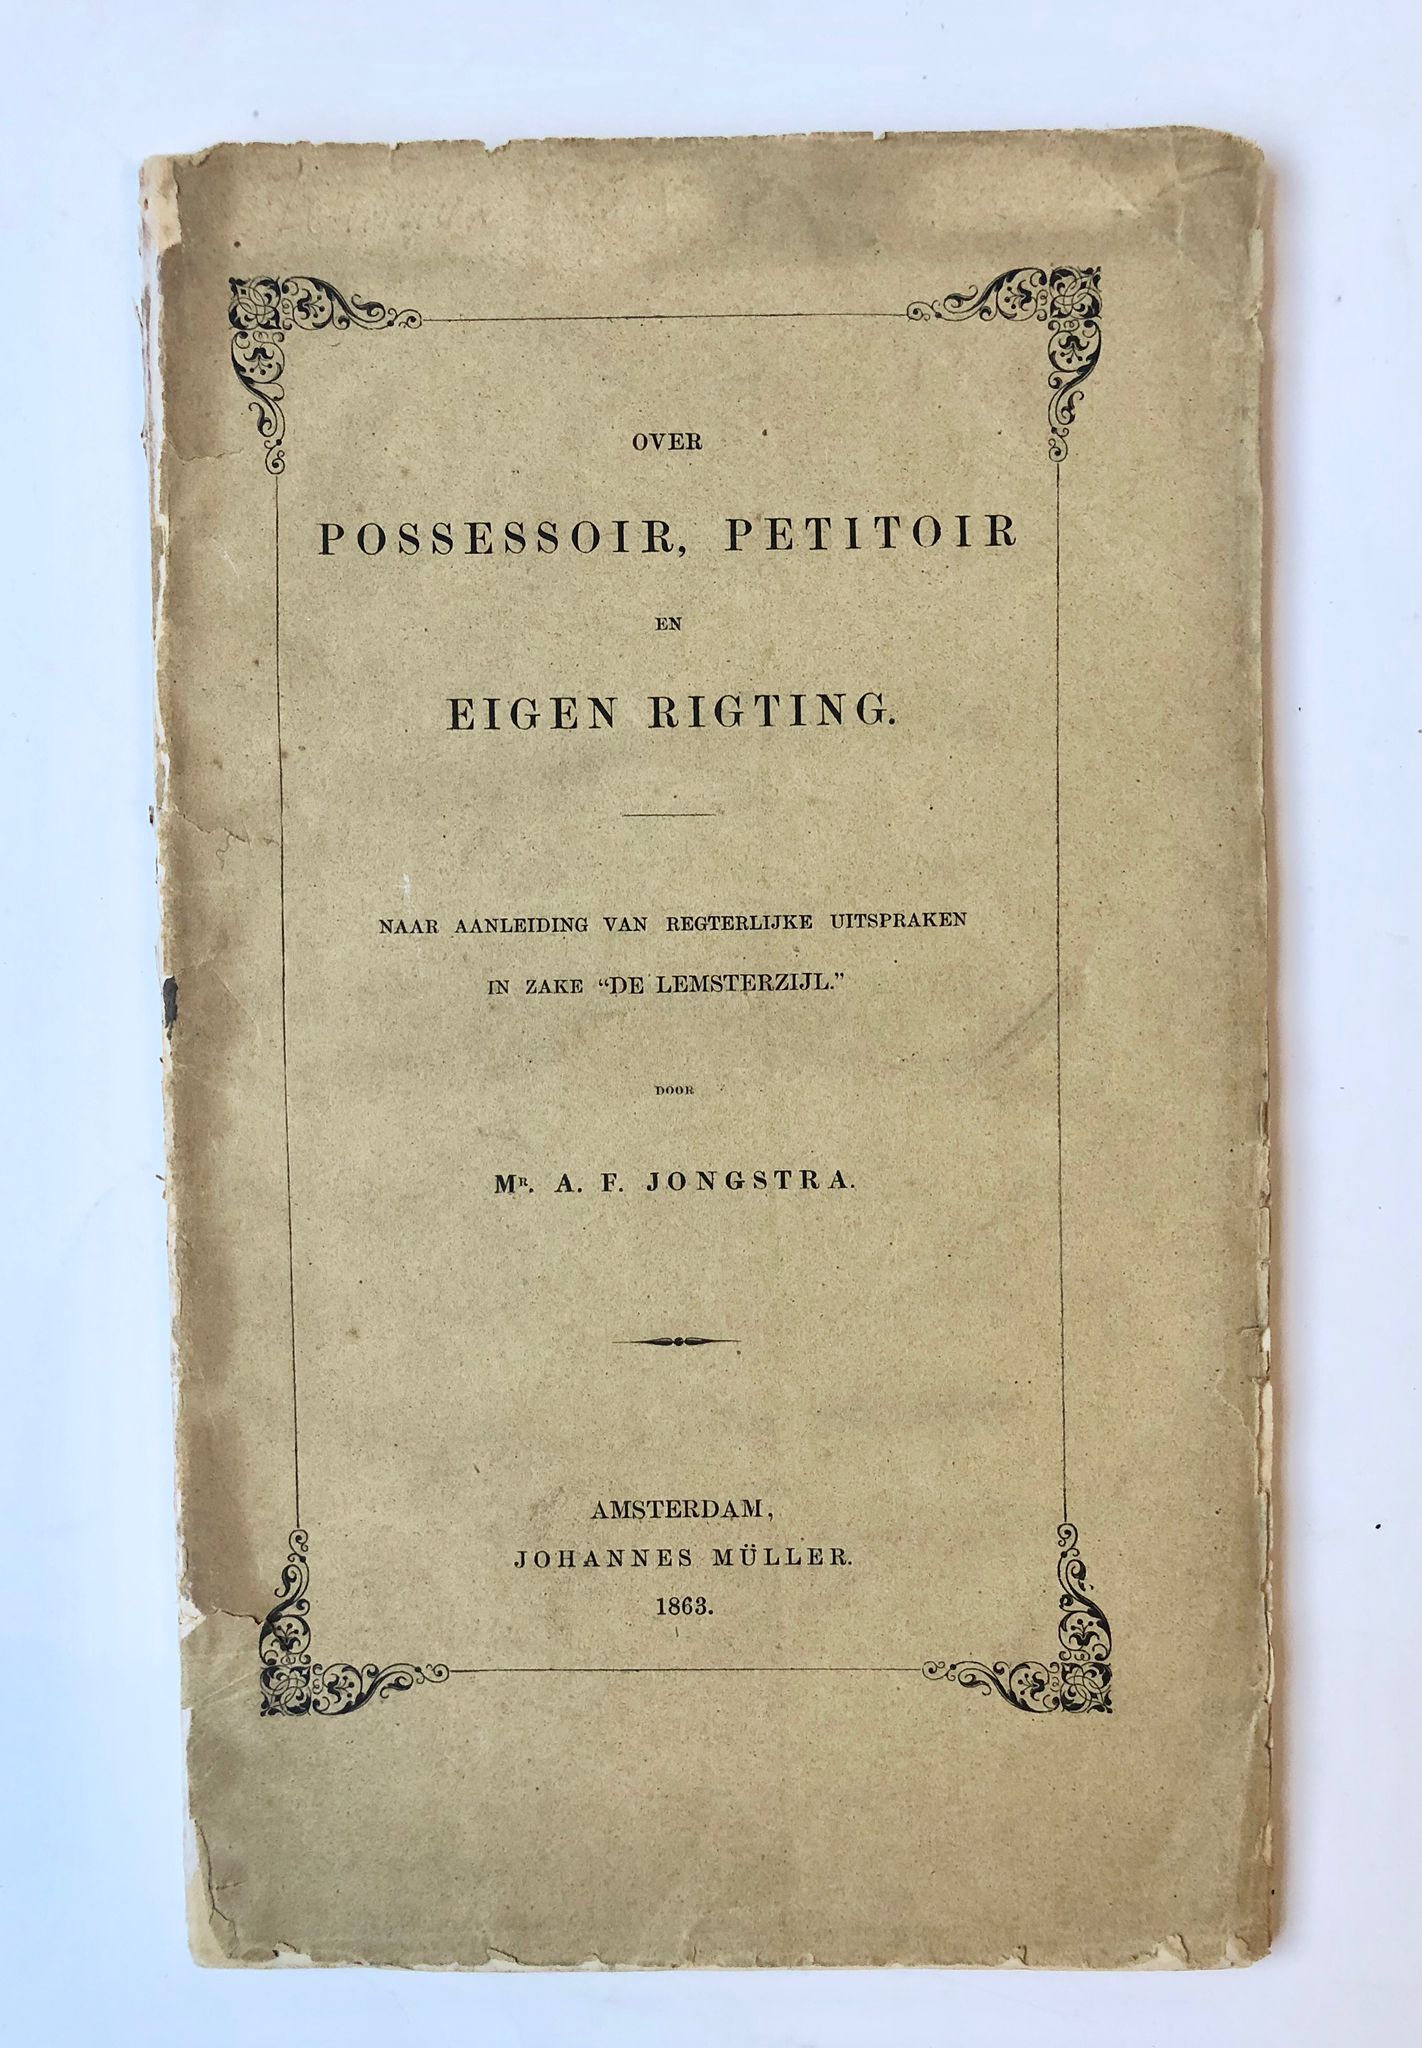 [Friesland, Lemmer, 1863] Over possessoir, petitoir en eigen rigting. Naar aanleiding van regterlijke uitsprakenin zake “De Lemsterzijl”, Johannes Müller, Amsterdam, Lemmer (Friesland), 1863, 66 pp.